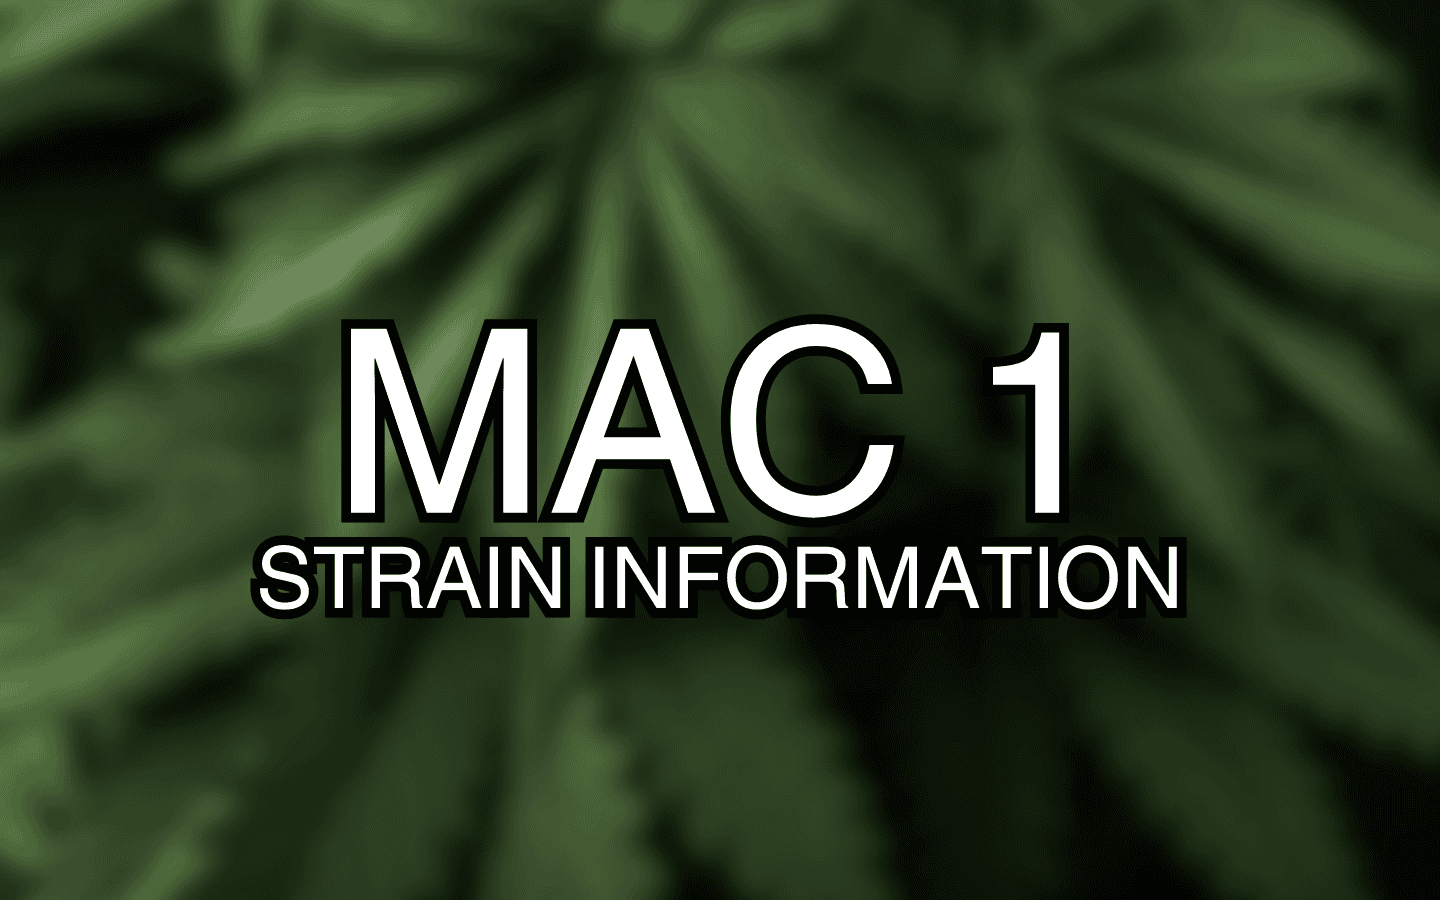 Mac 1 Strain Information